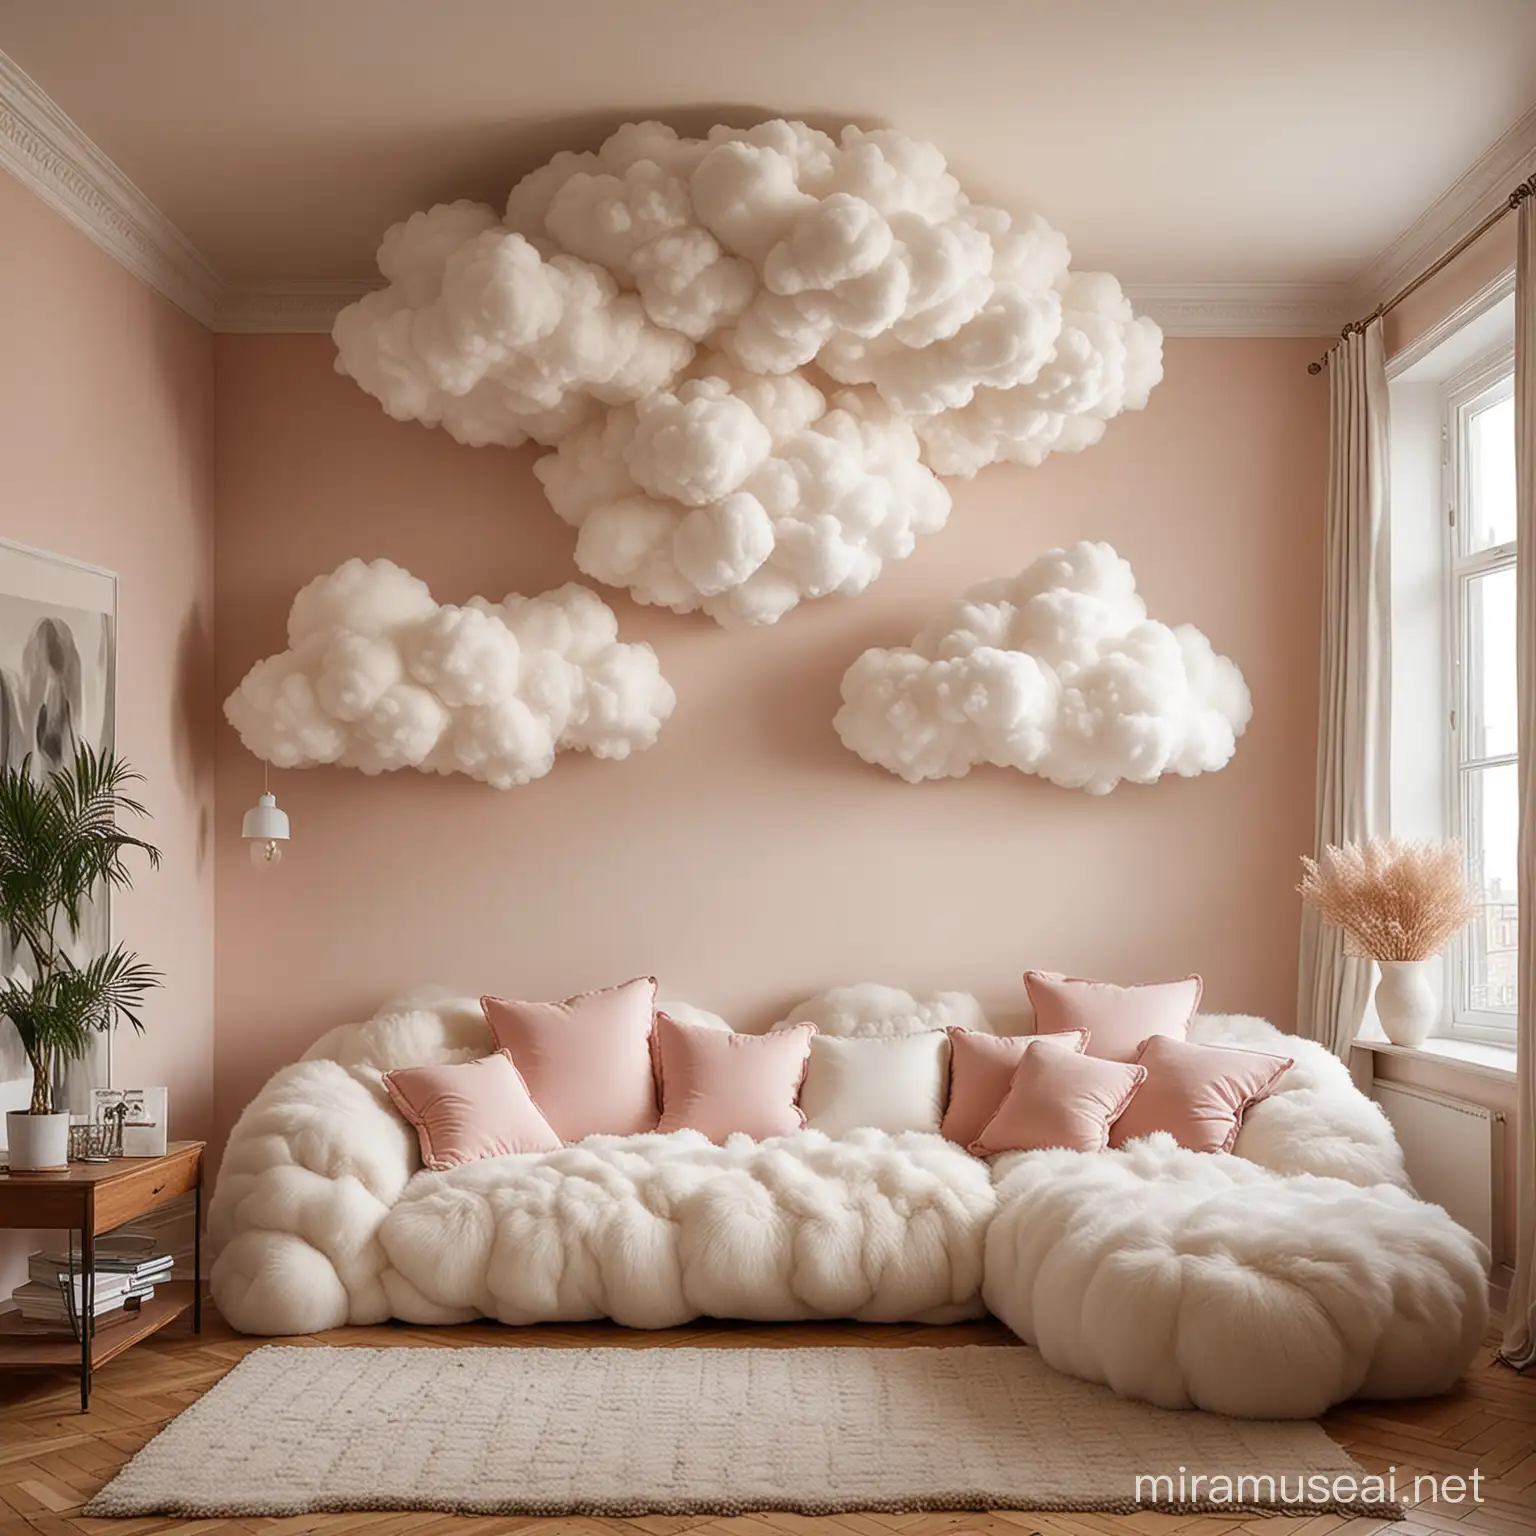 Dreamy CloudInspired Cozy Interior Design